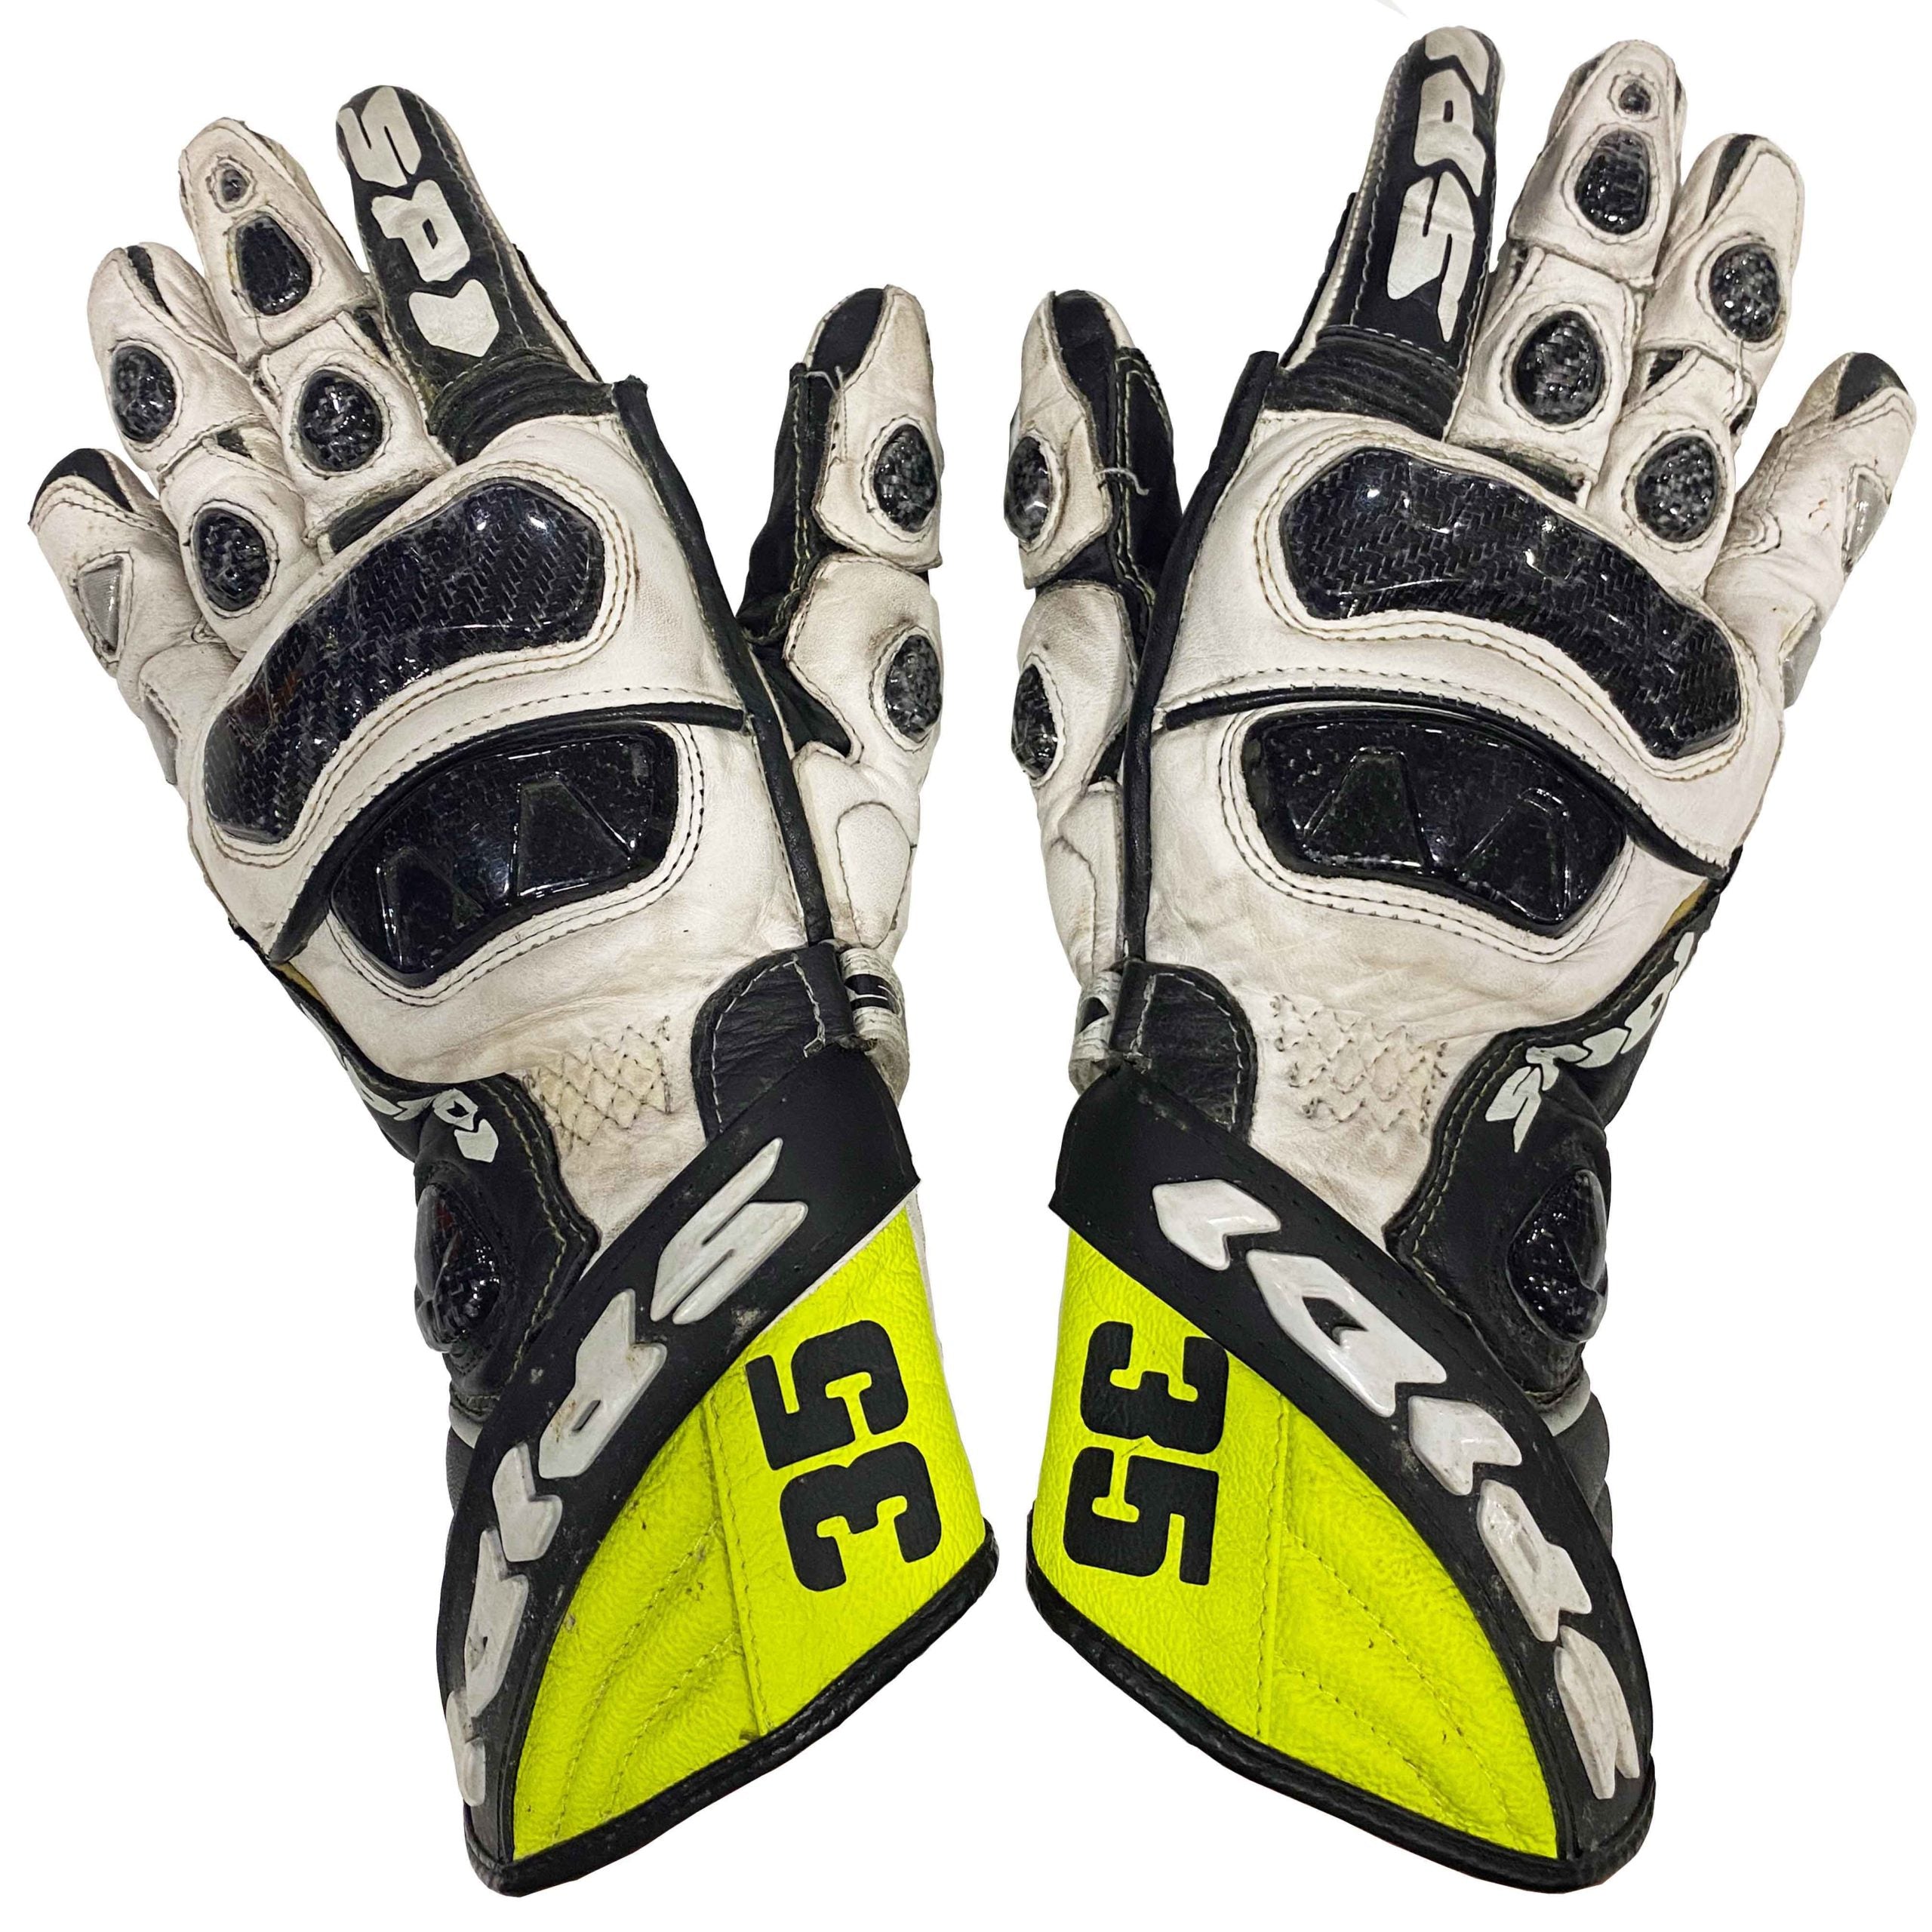 2011 Cal Crutchlow Signed Race Used Yamaha Tech 3 MotoGP Gloves